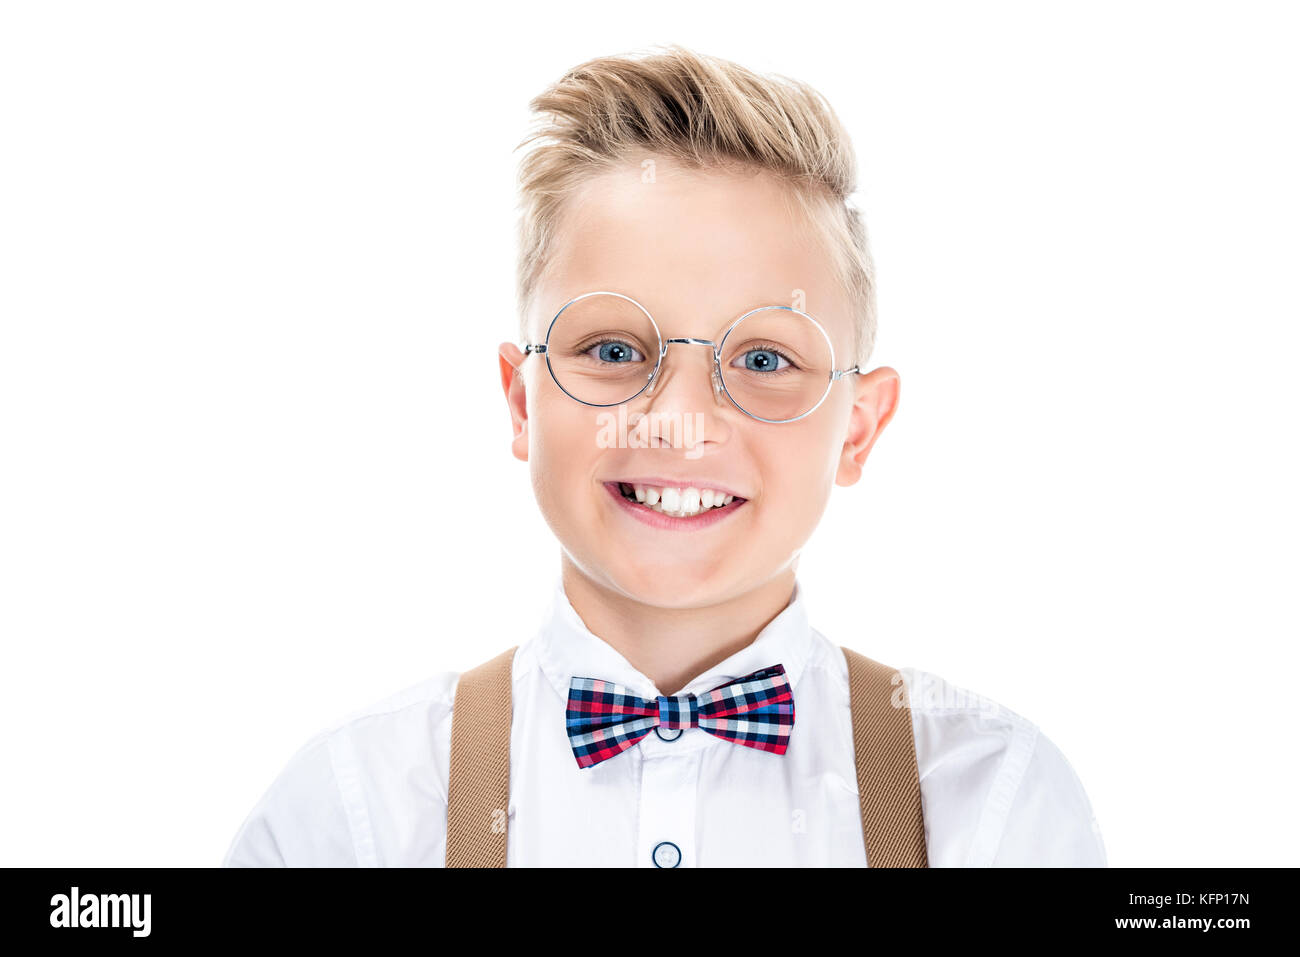 stylish child in eyeglasses Stock Photo